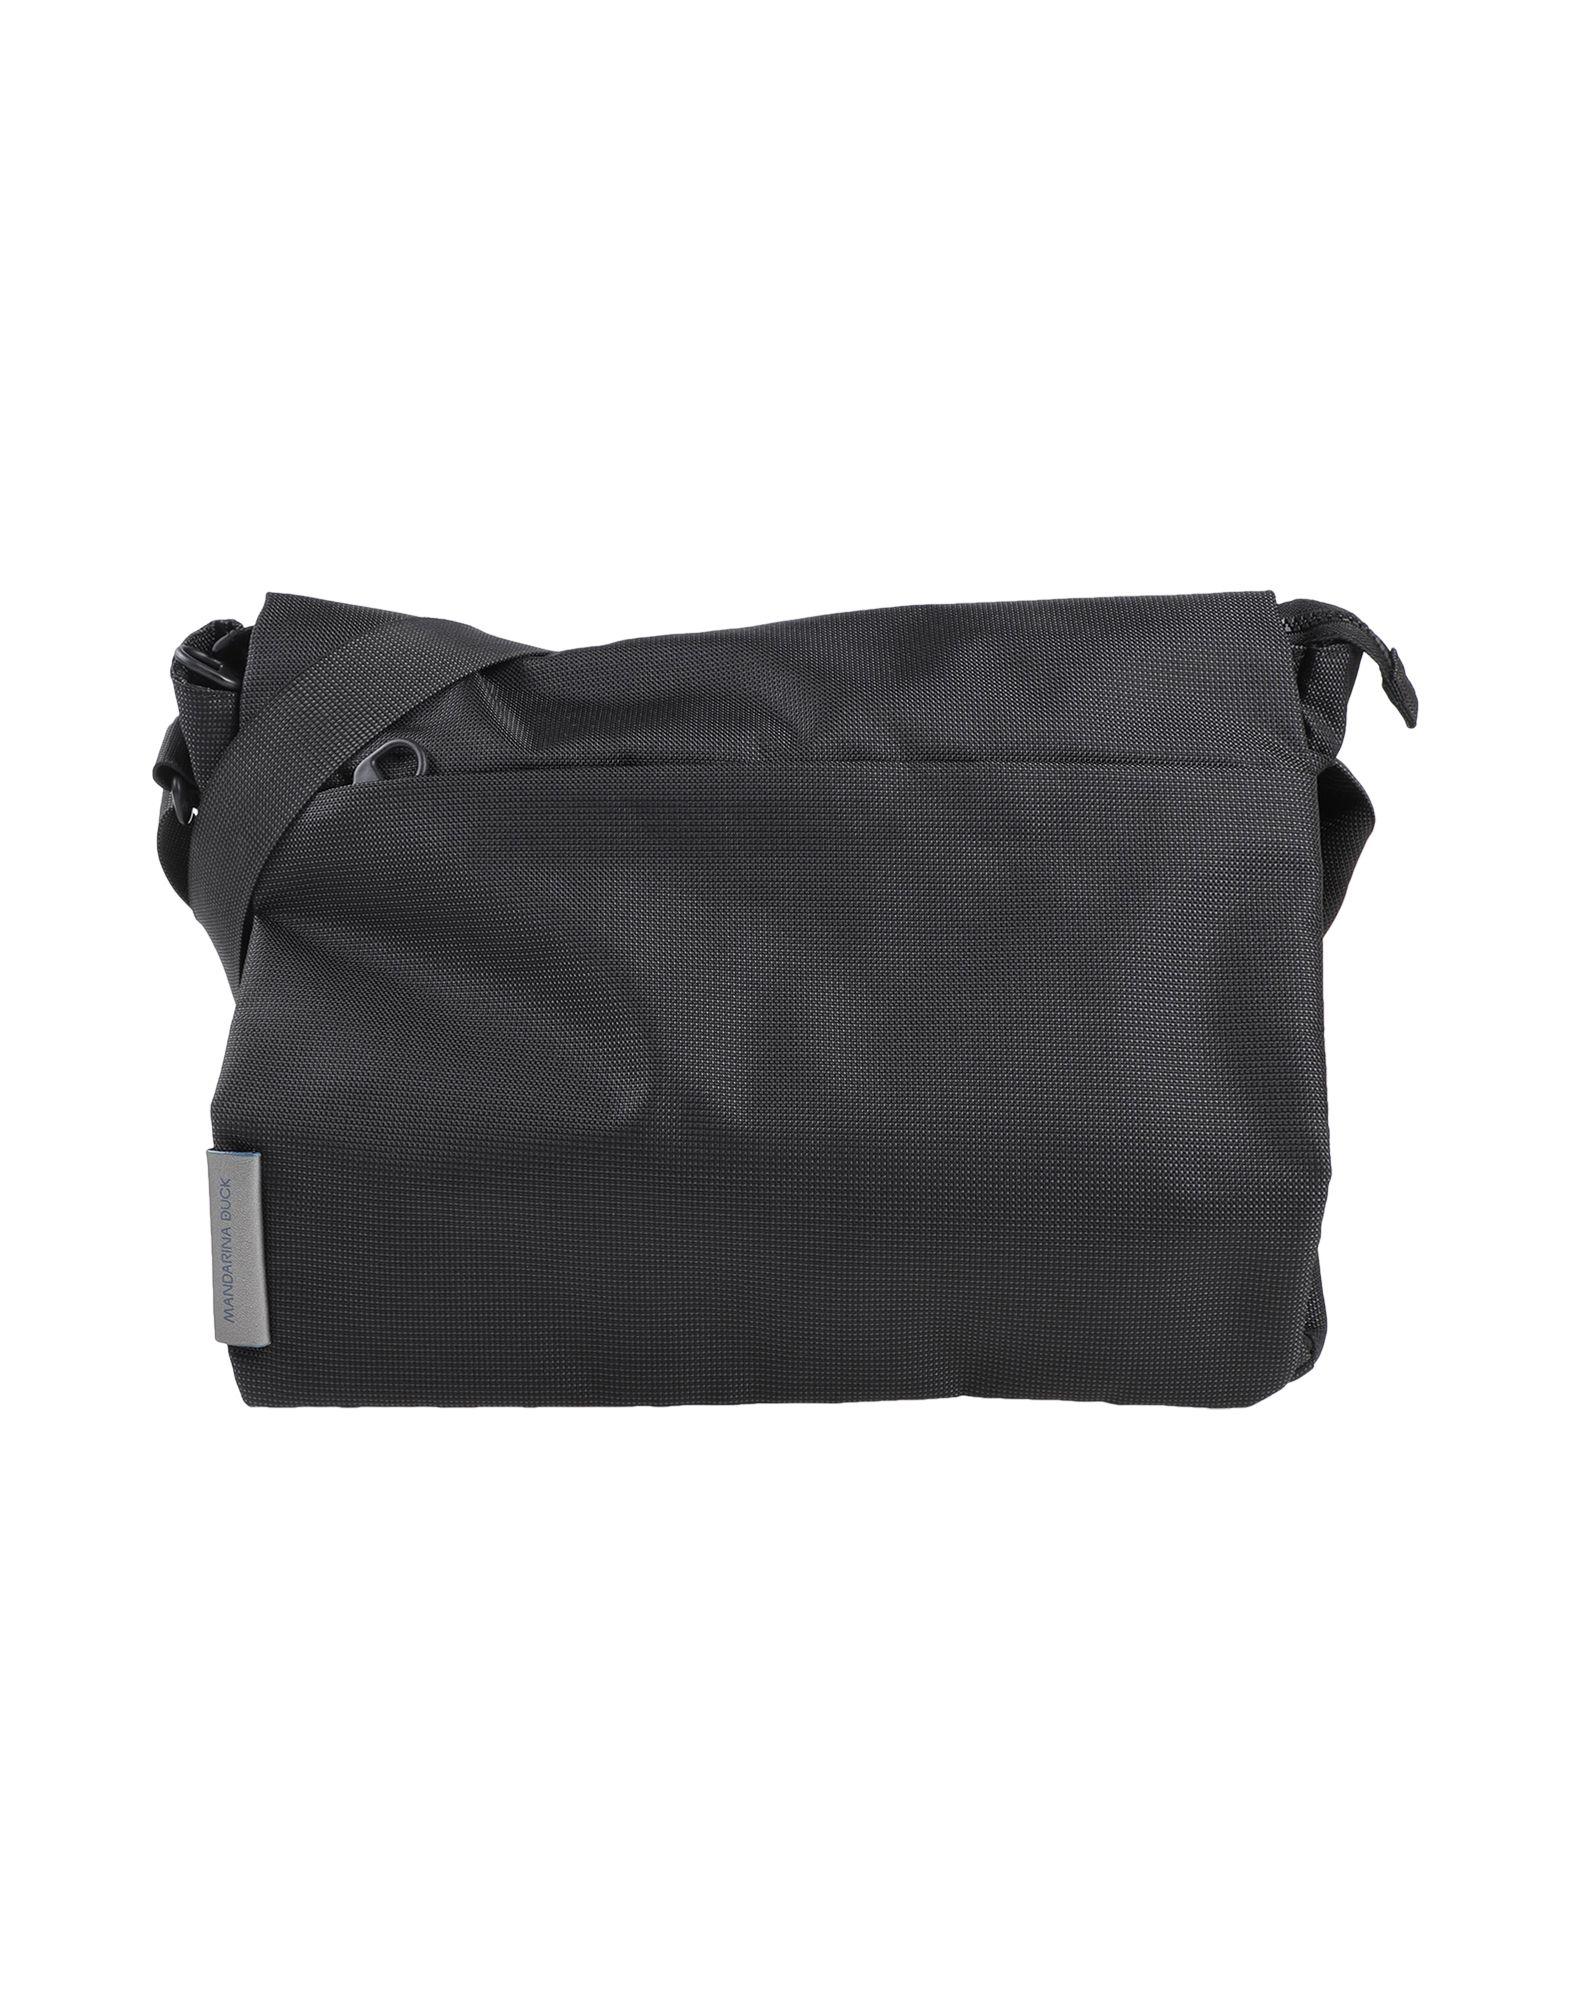 Mandarina Duck Synthetic Cross-body Bag in Steel Grey (Gray) for Men - Lyst